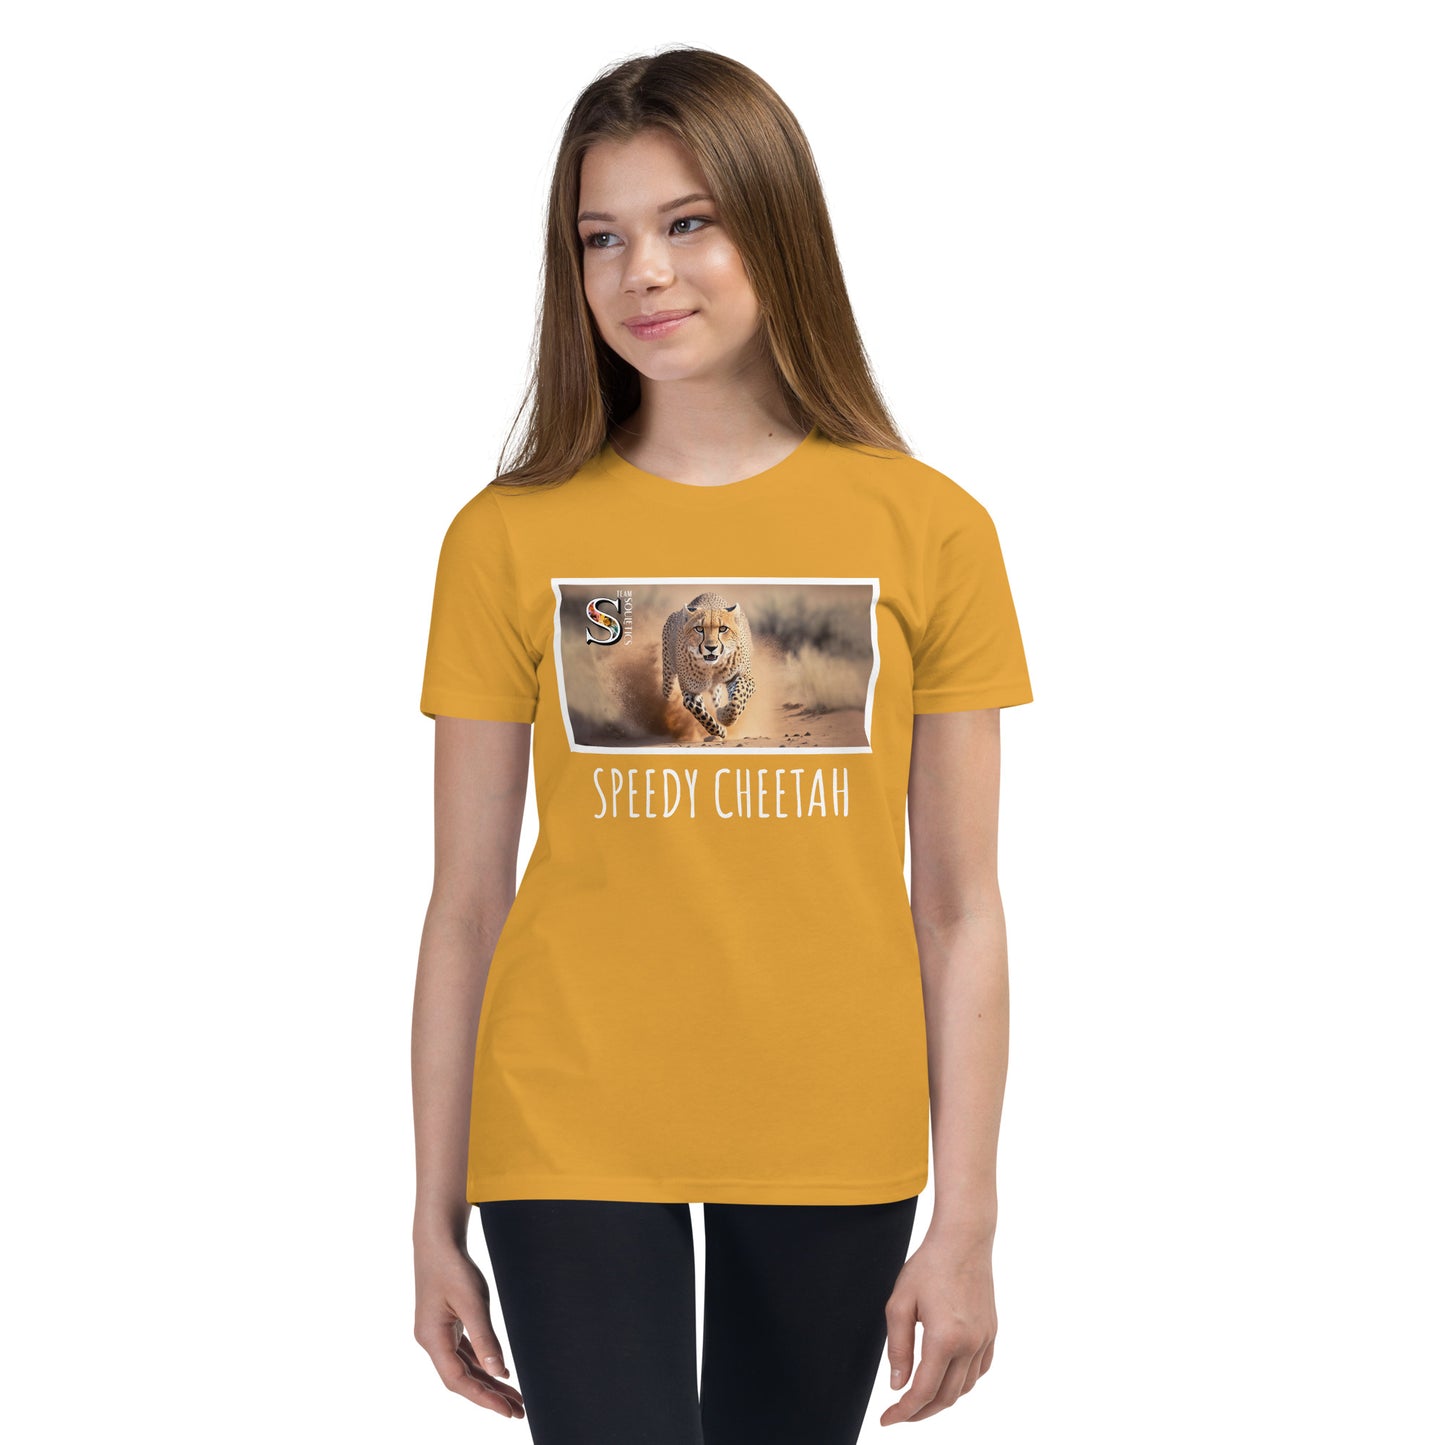 Speedy Cheetah by Lola Youth Short Sleeve T-Shirt